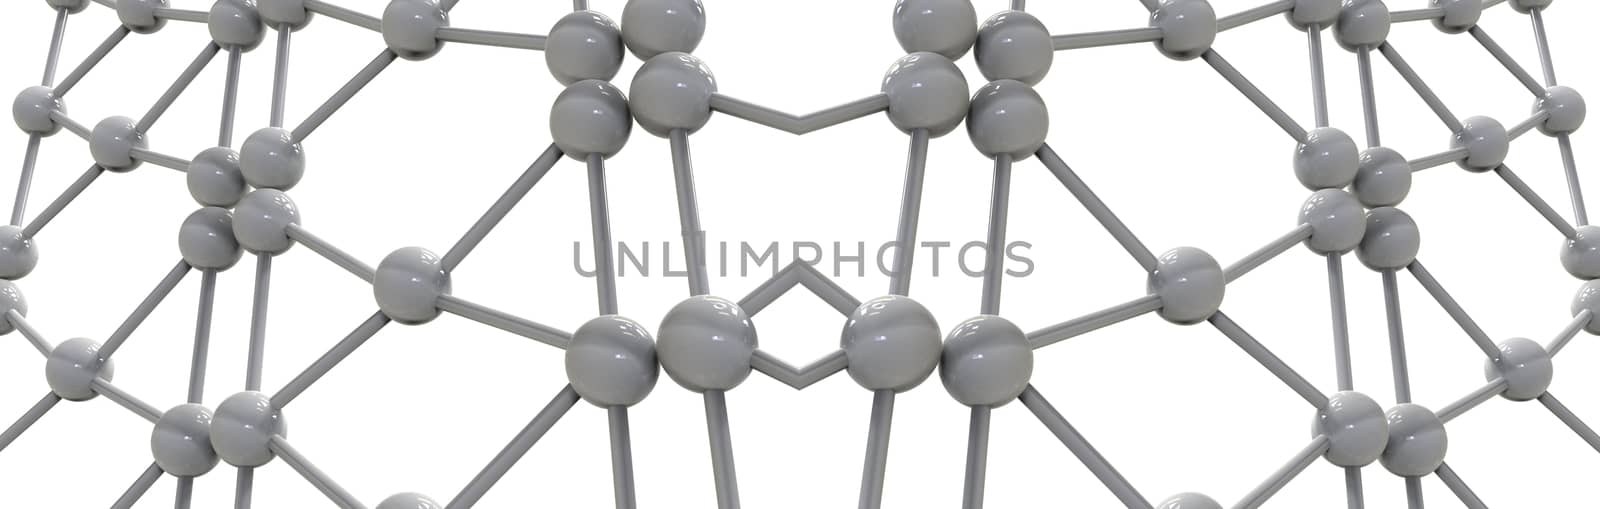 3d render illustration of molecular mesh structure by vitanovski